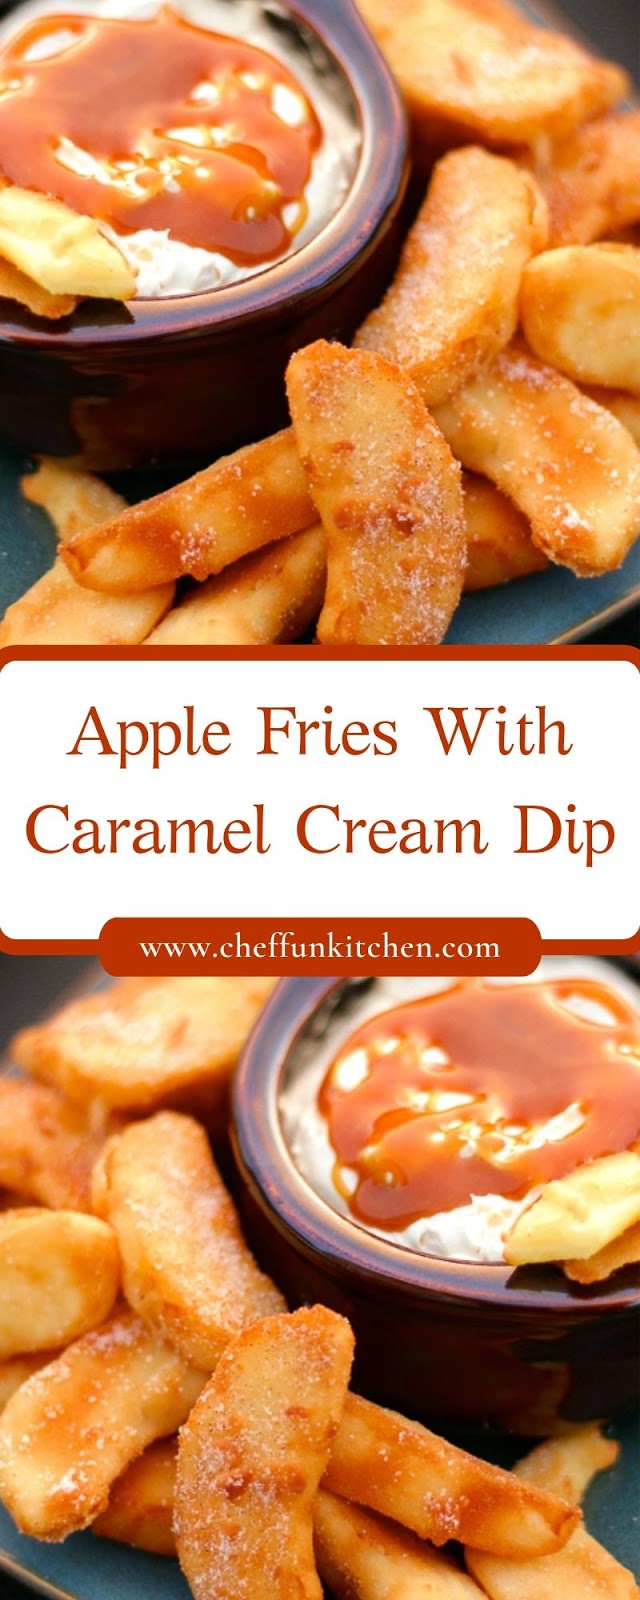 Apple Fries With Caramel Cream Dip